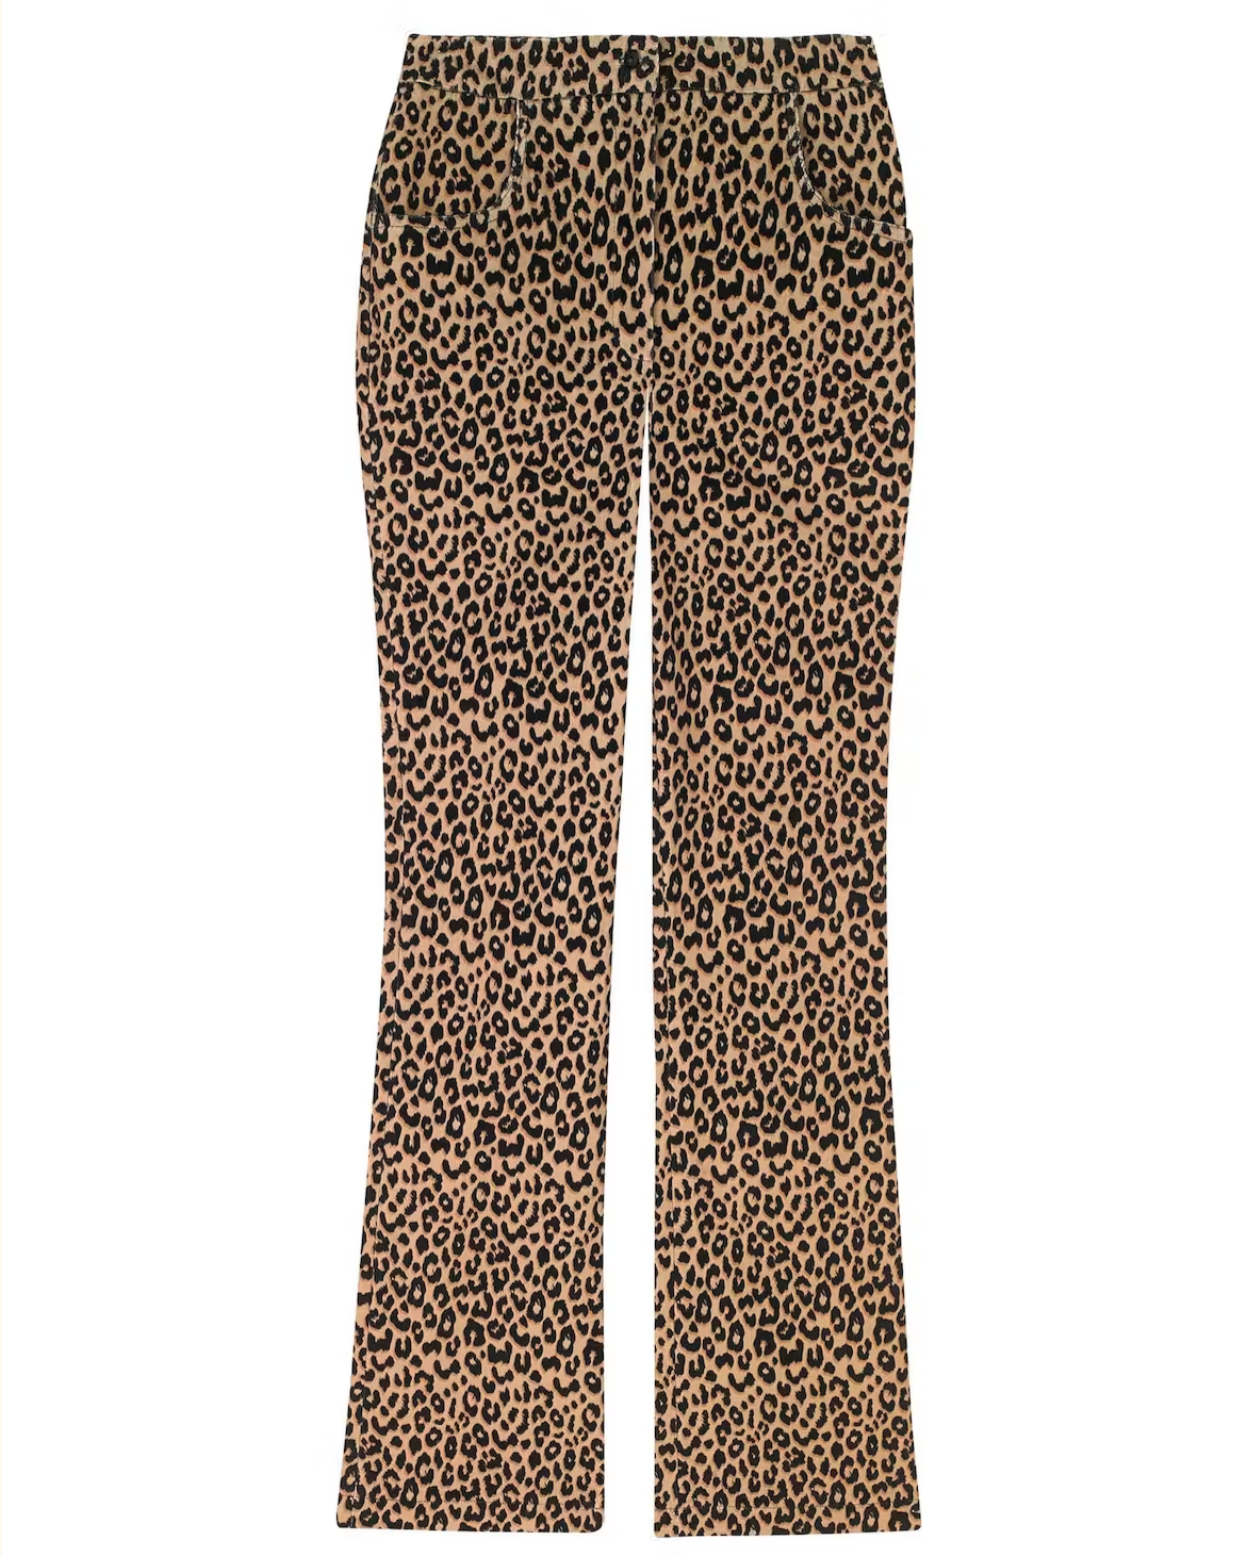 Yolke 3 Piece Leopard Print Suit